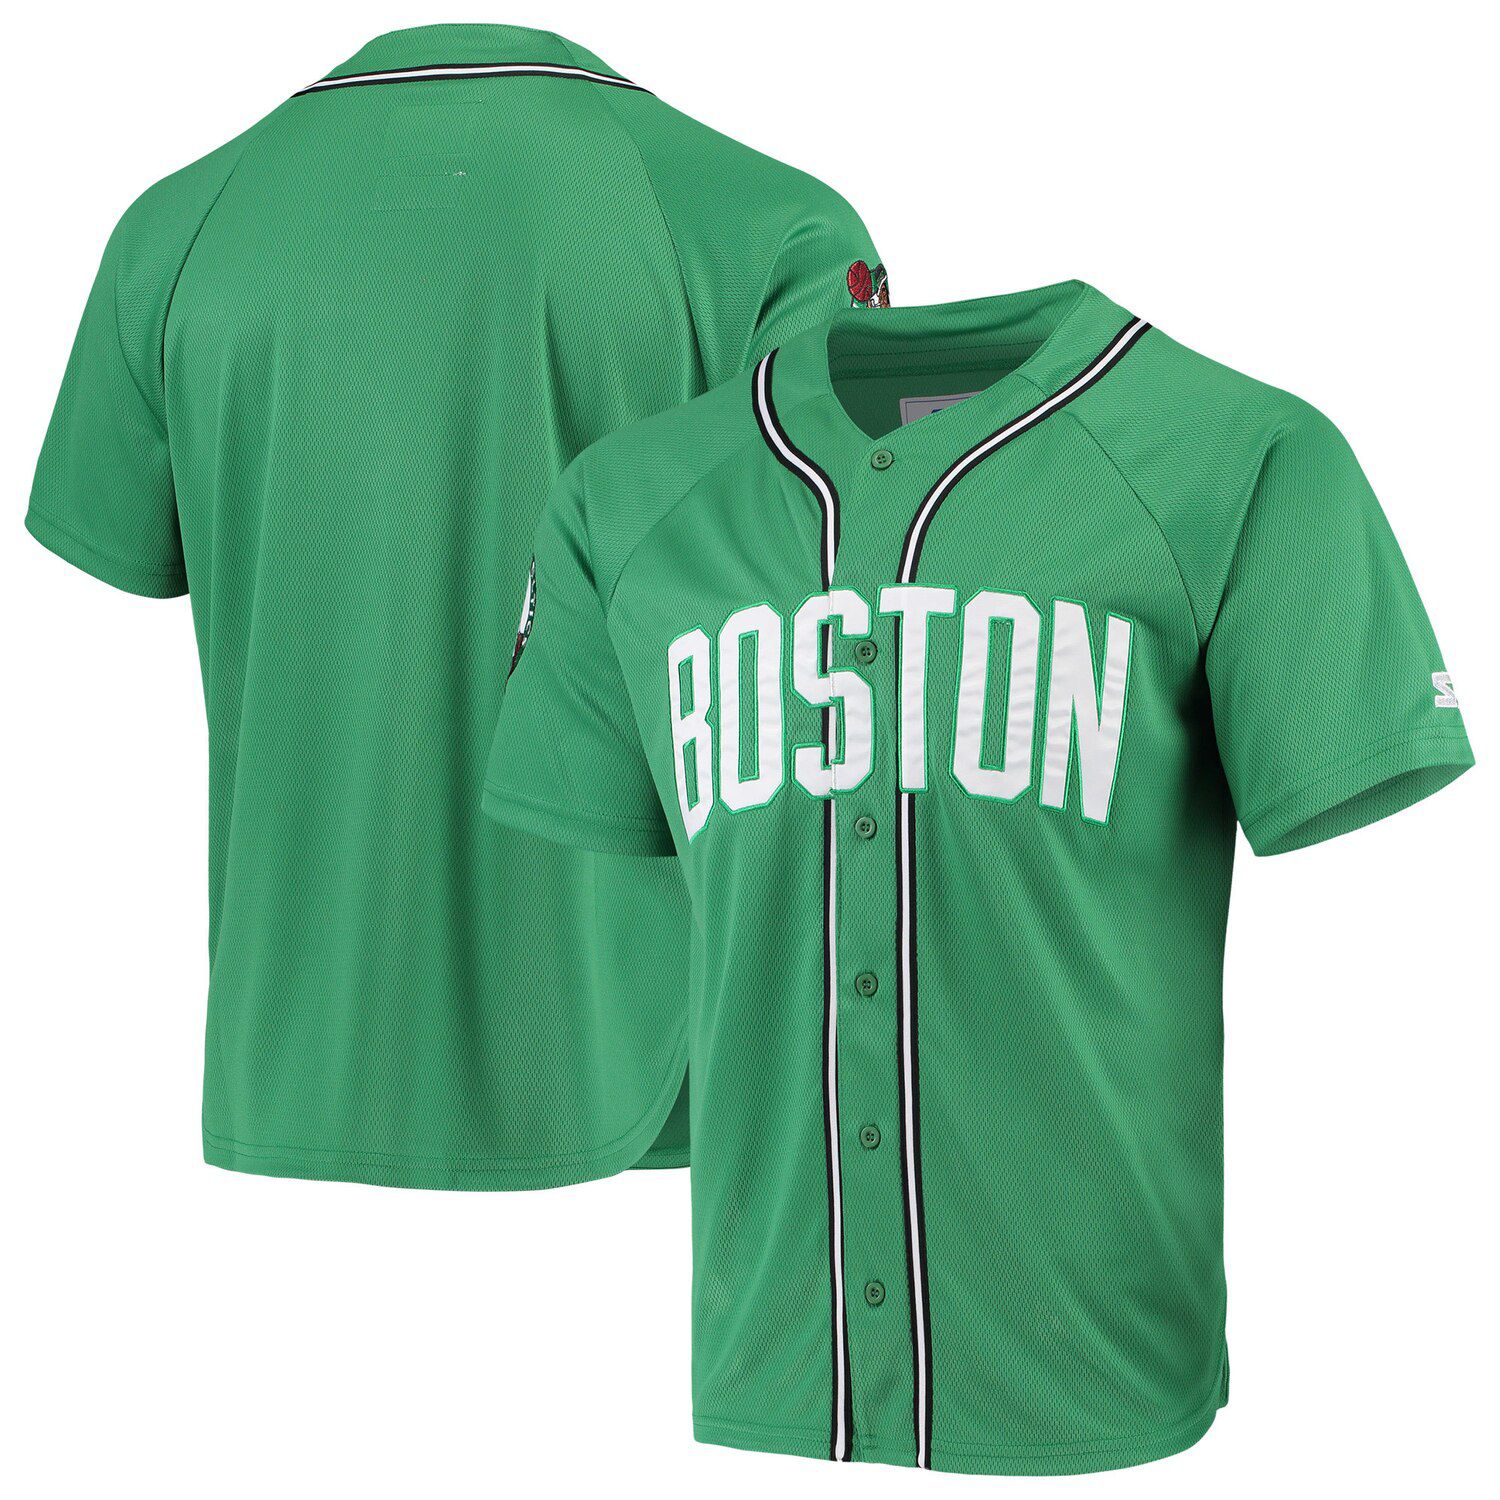 green baseball jersey